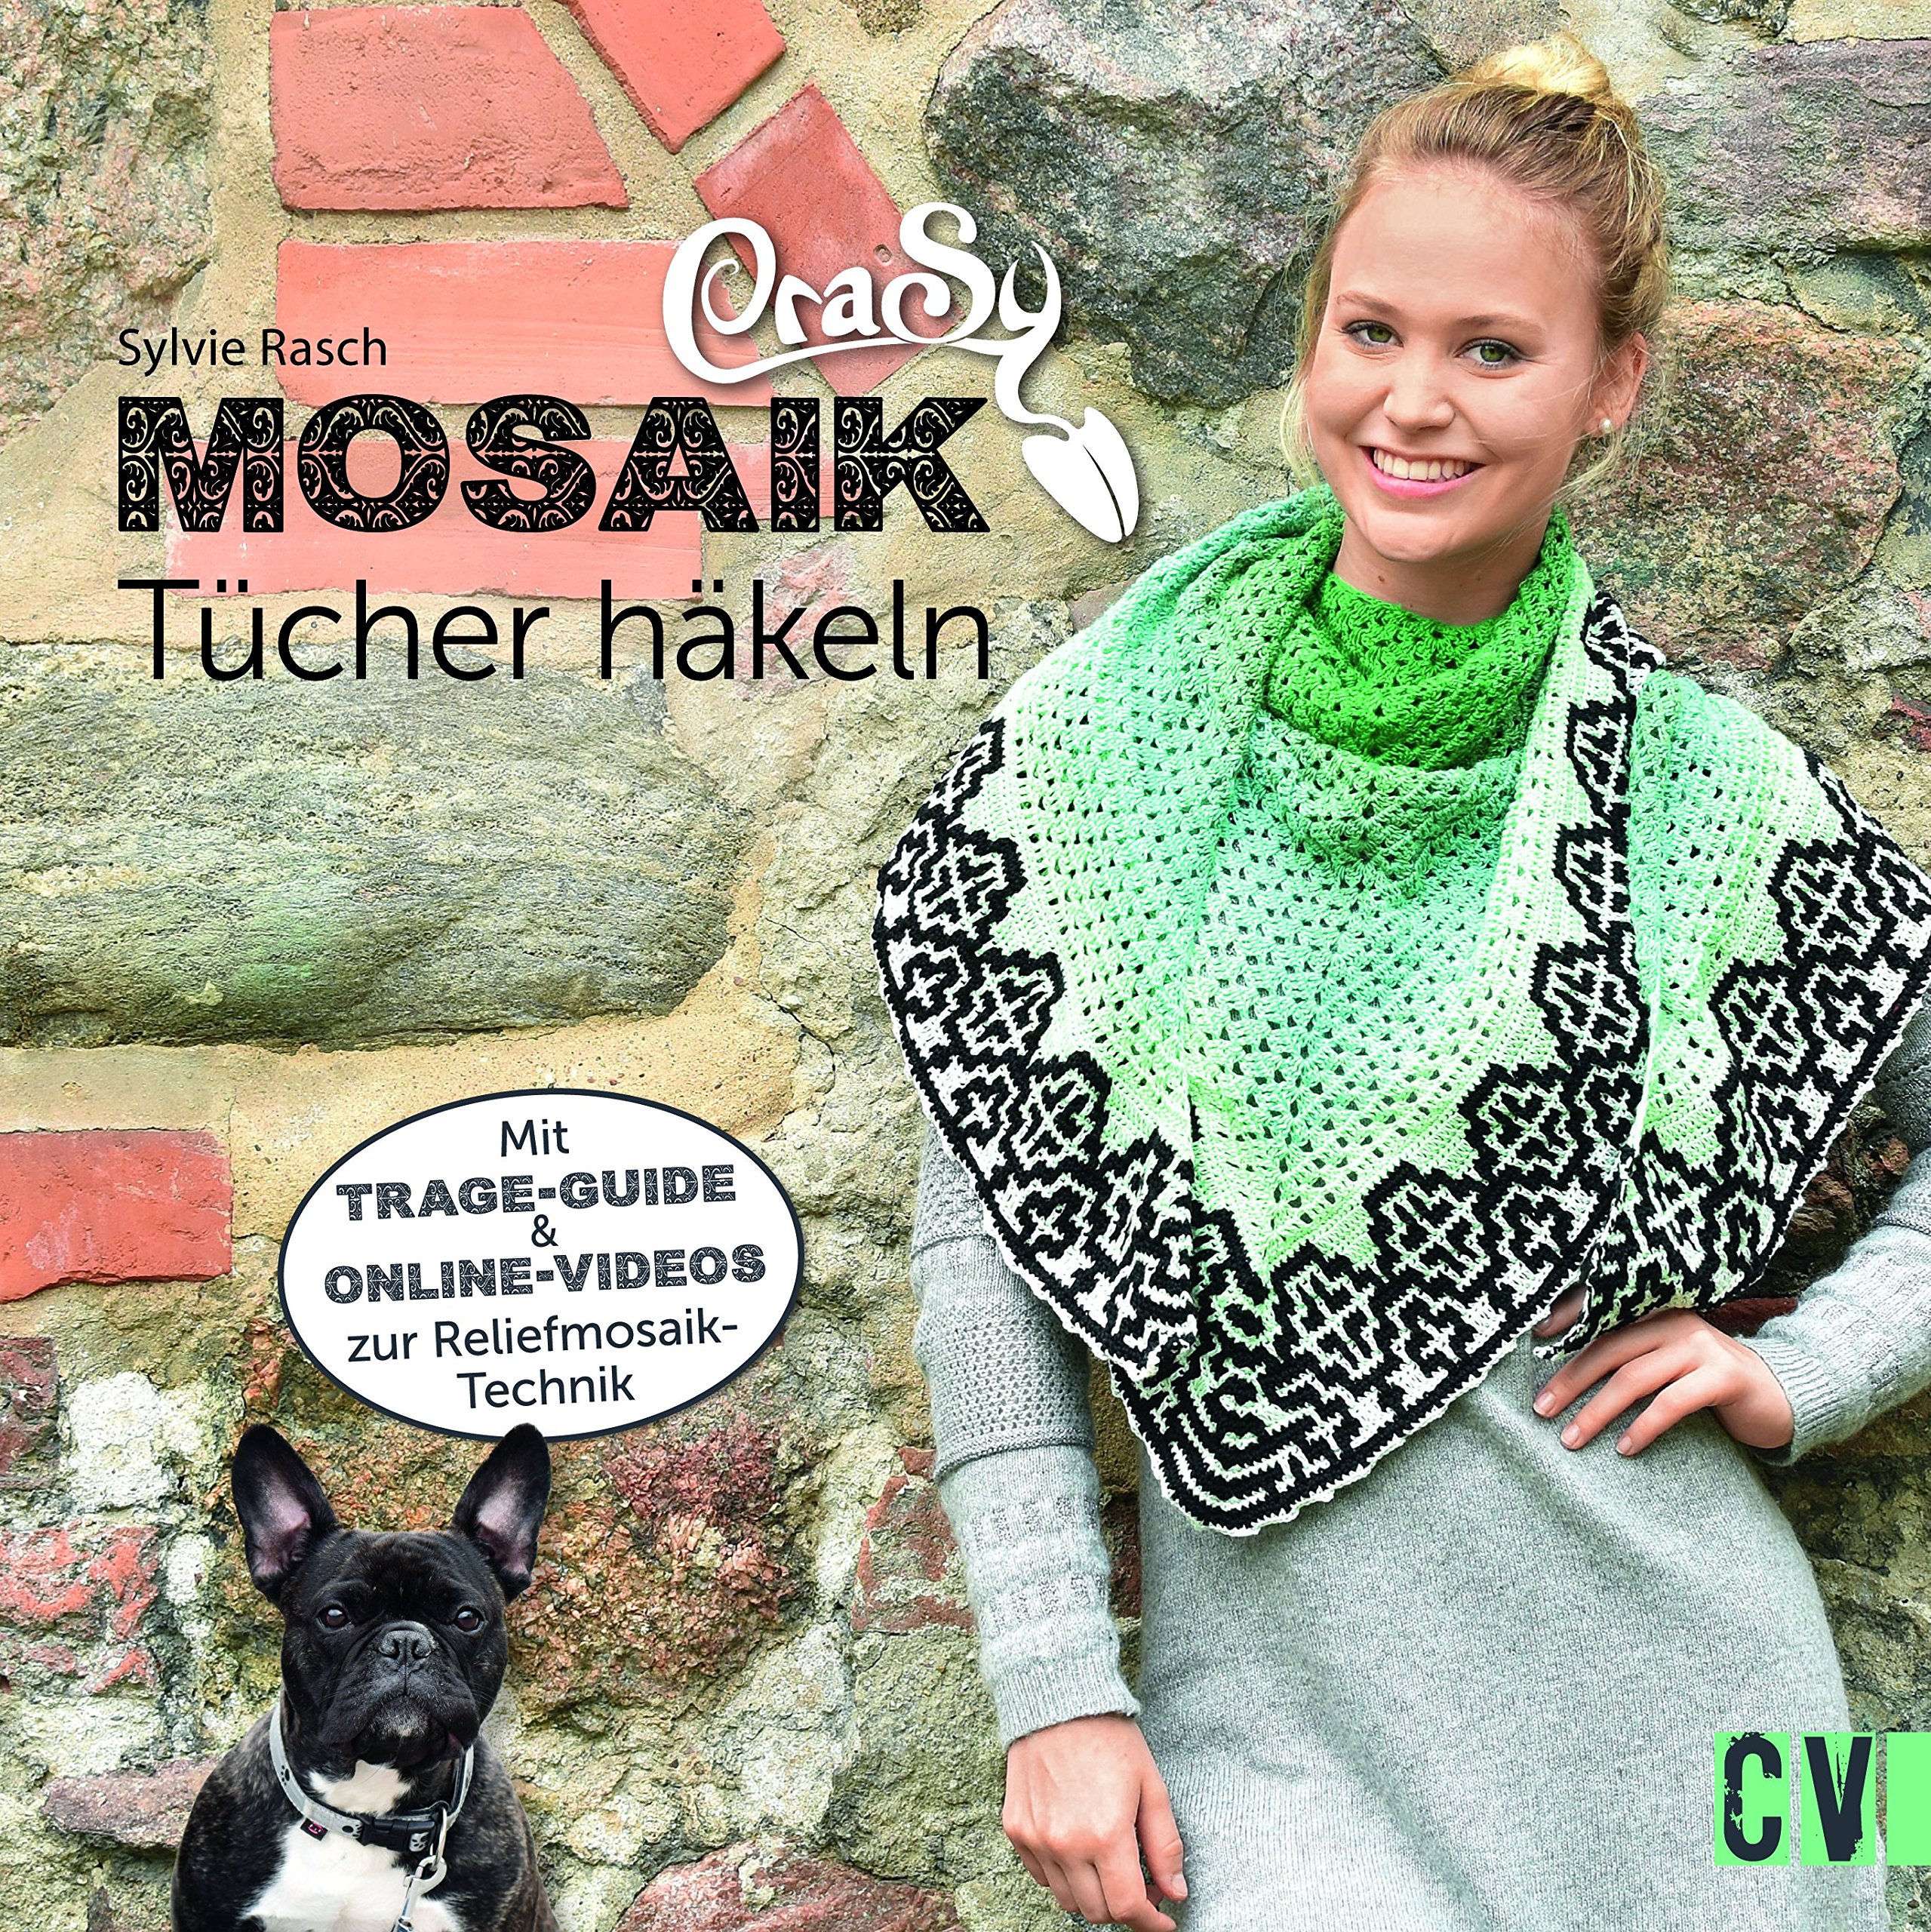 CraSy Mosaik - Tücher häkeln von Sylvie Rasch